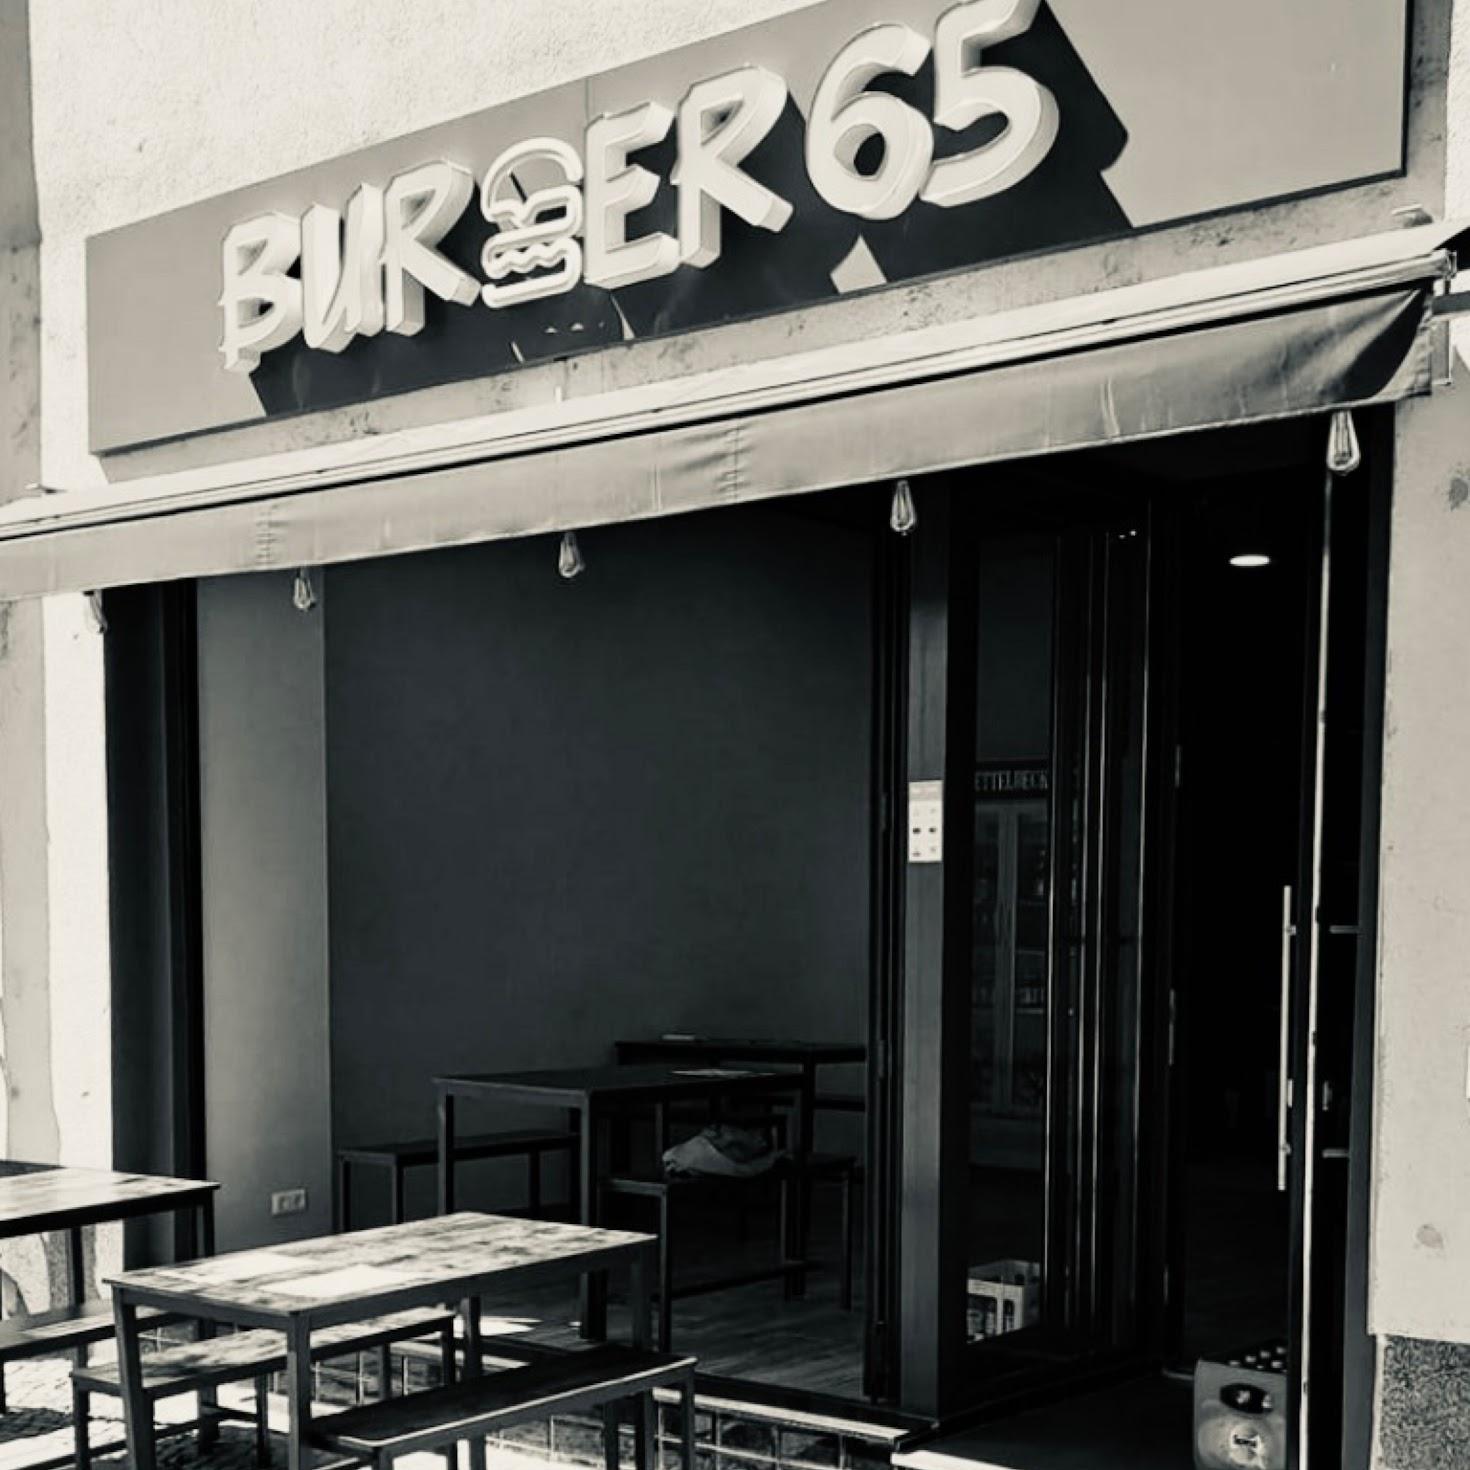 Restaurant "Burger65" in Berlin